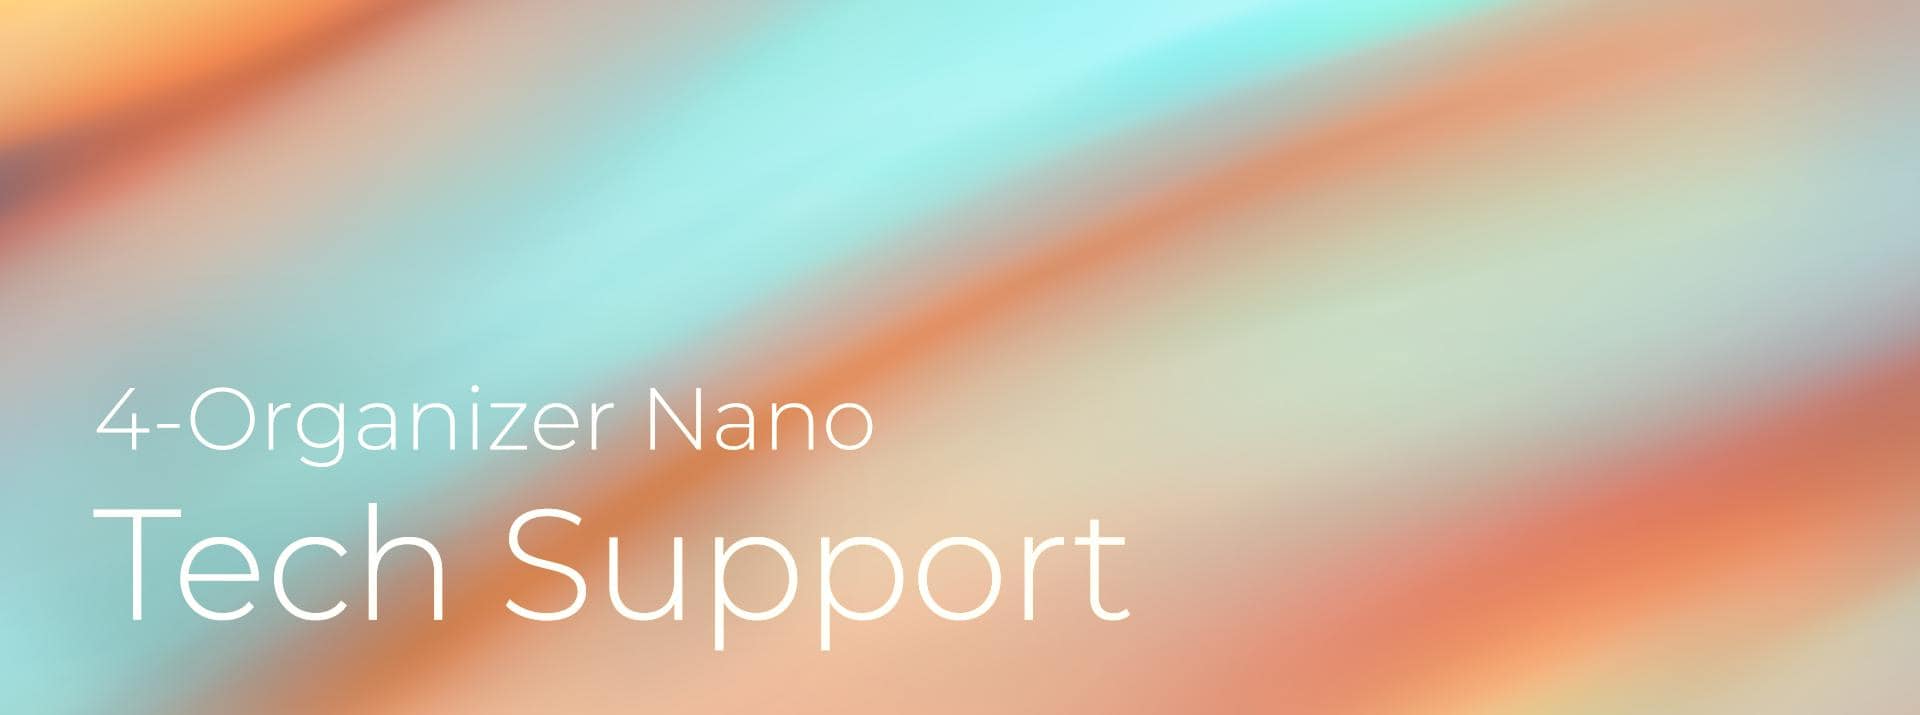 Ambeteco: 4-Organizer Nano Support